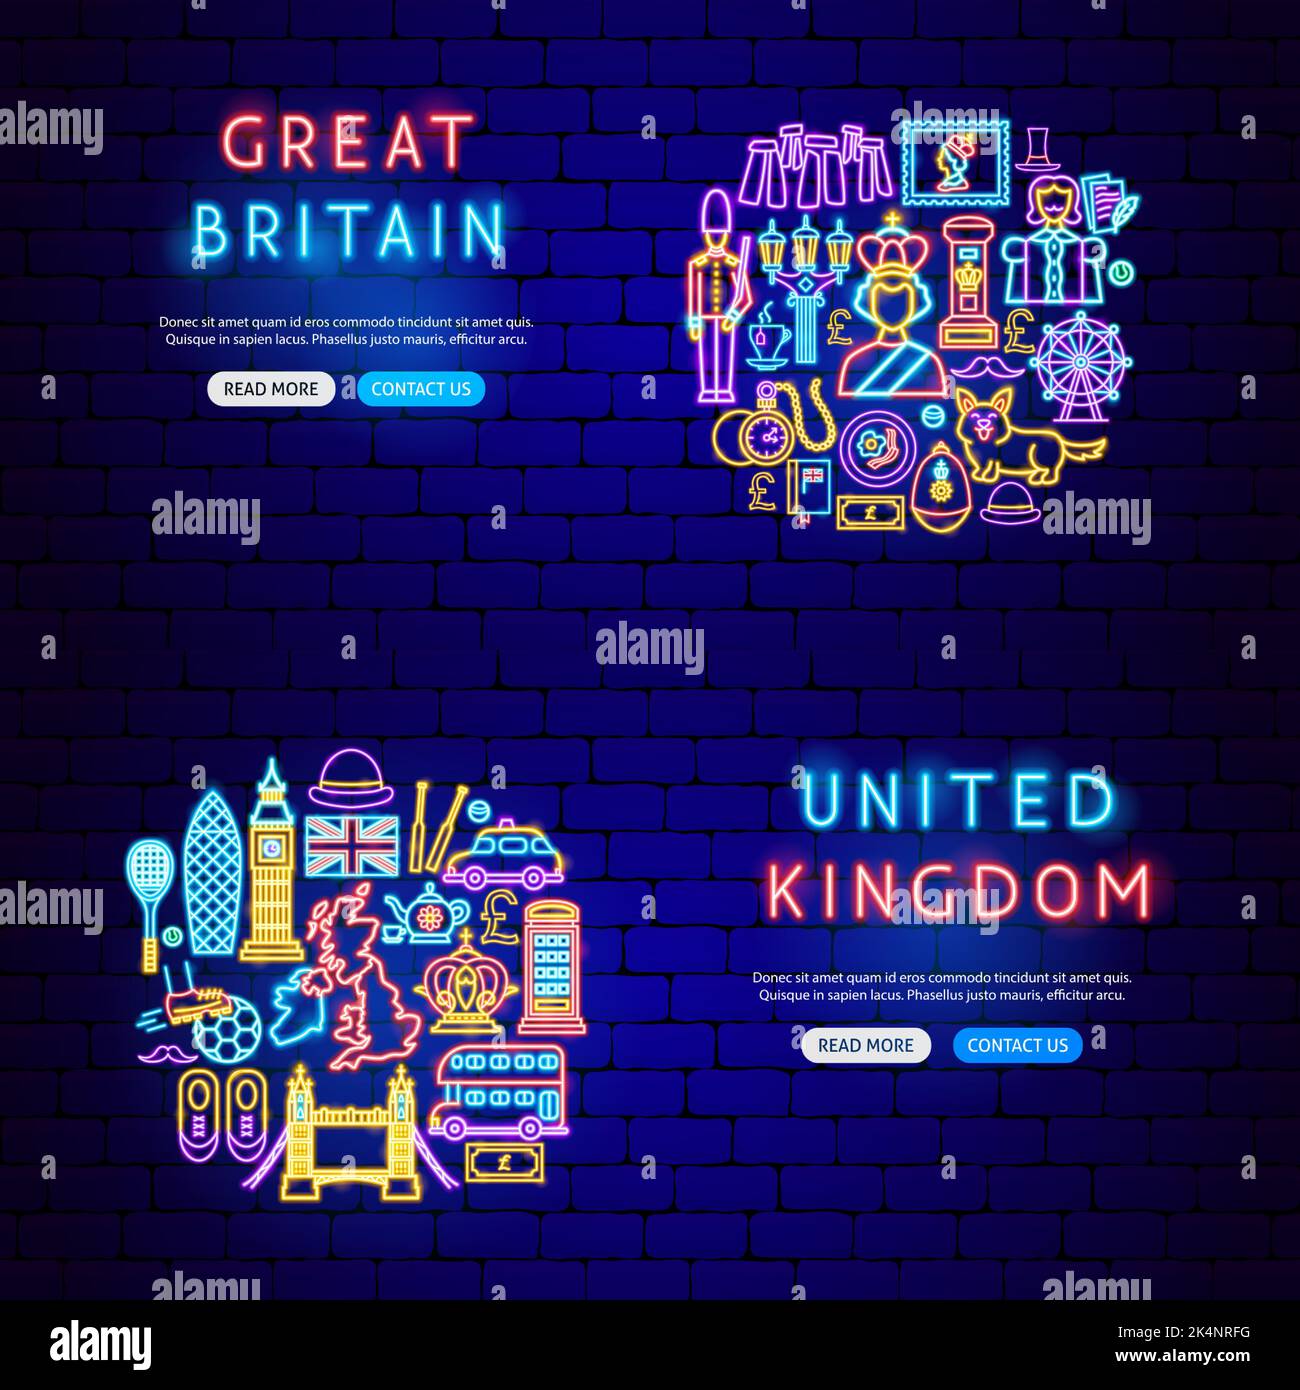 Great Britain Neon Banners Stock Vector